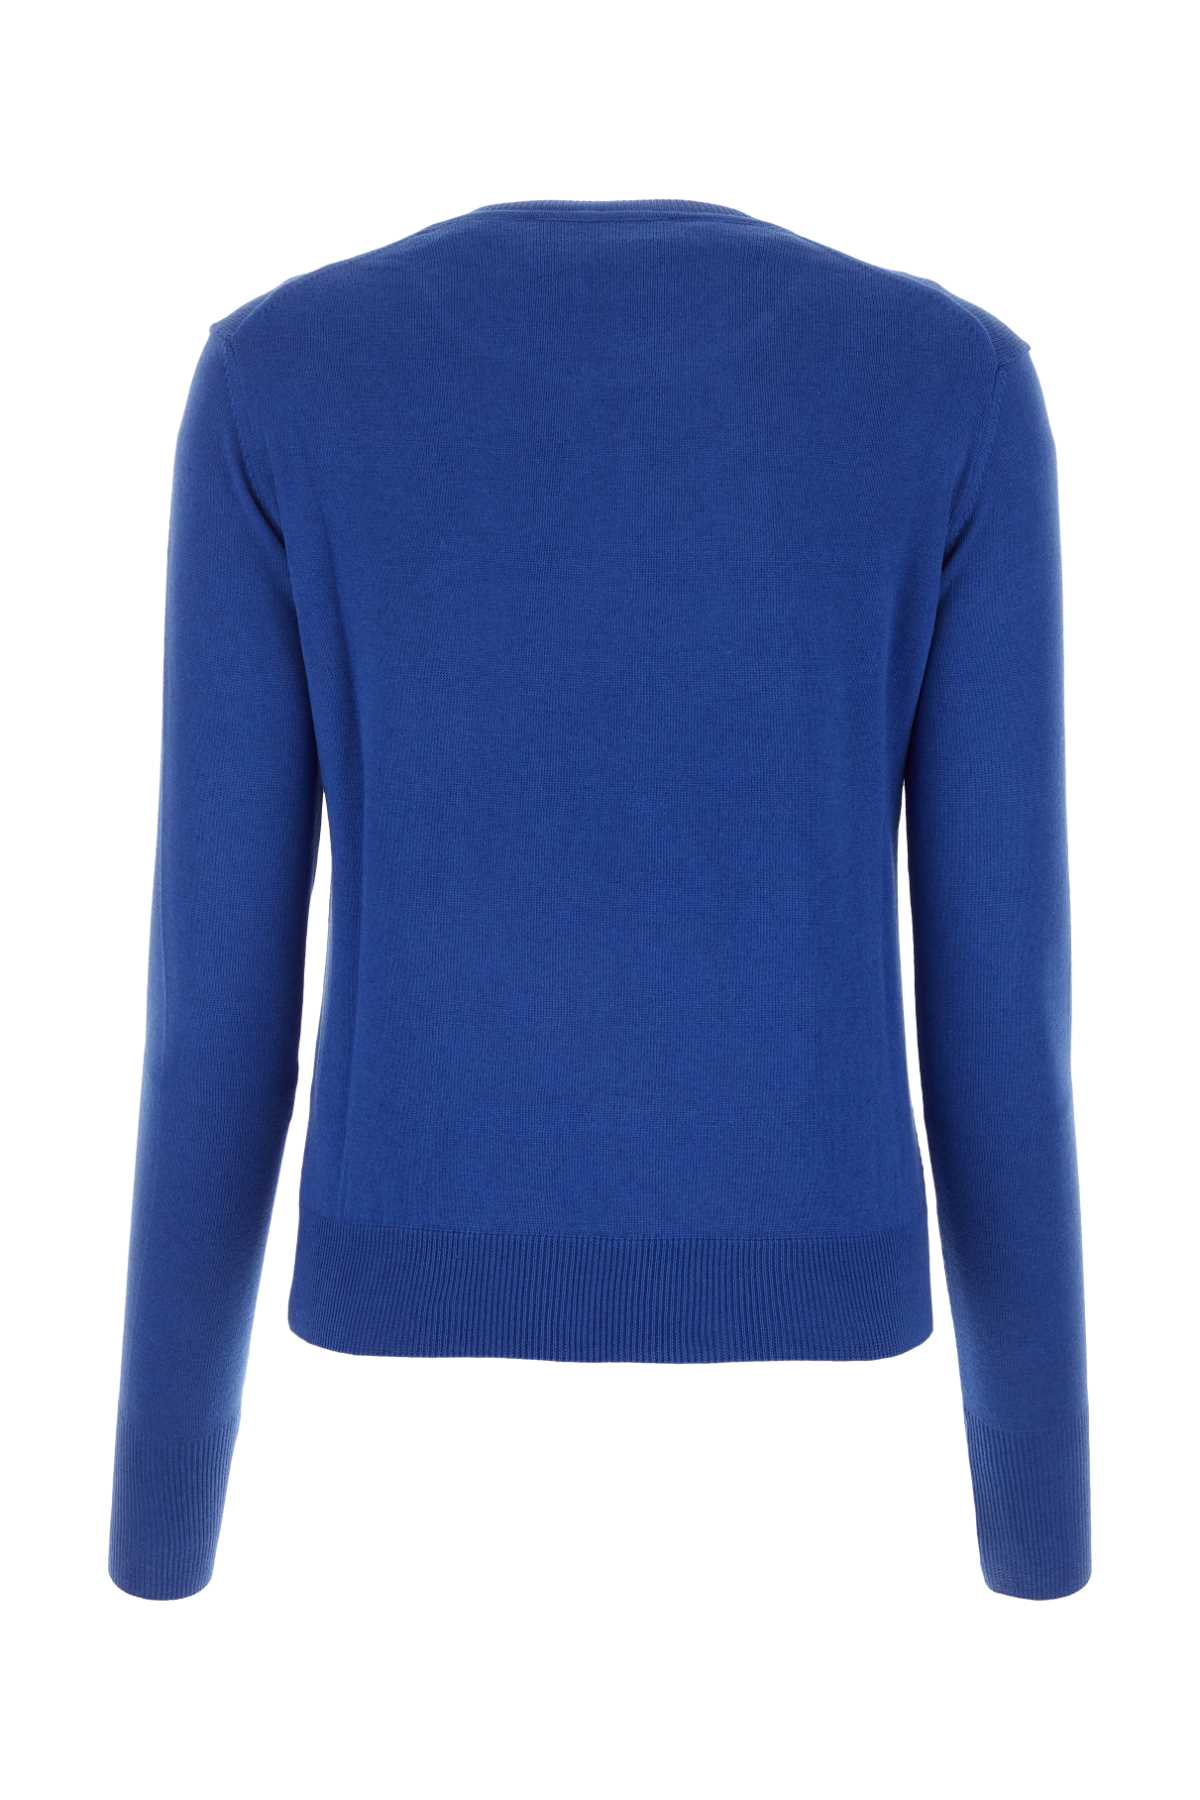 Vivienne Westwood Electric Blue Cotton Blend Bea Sweater In Ocean